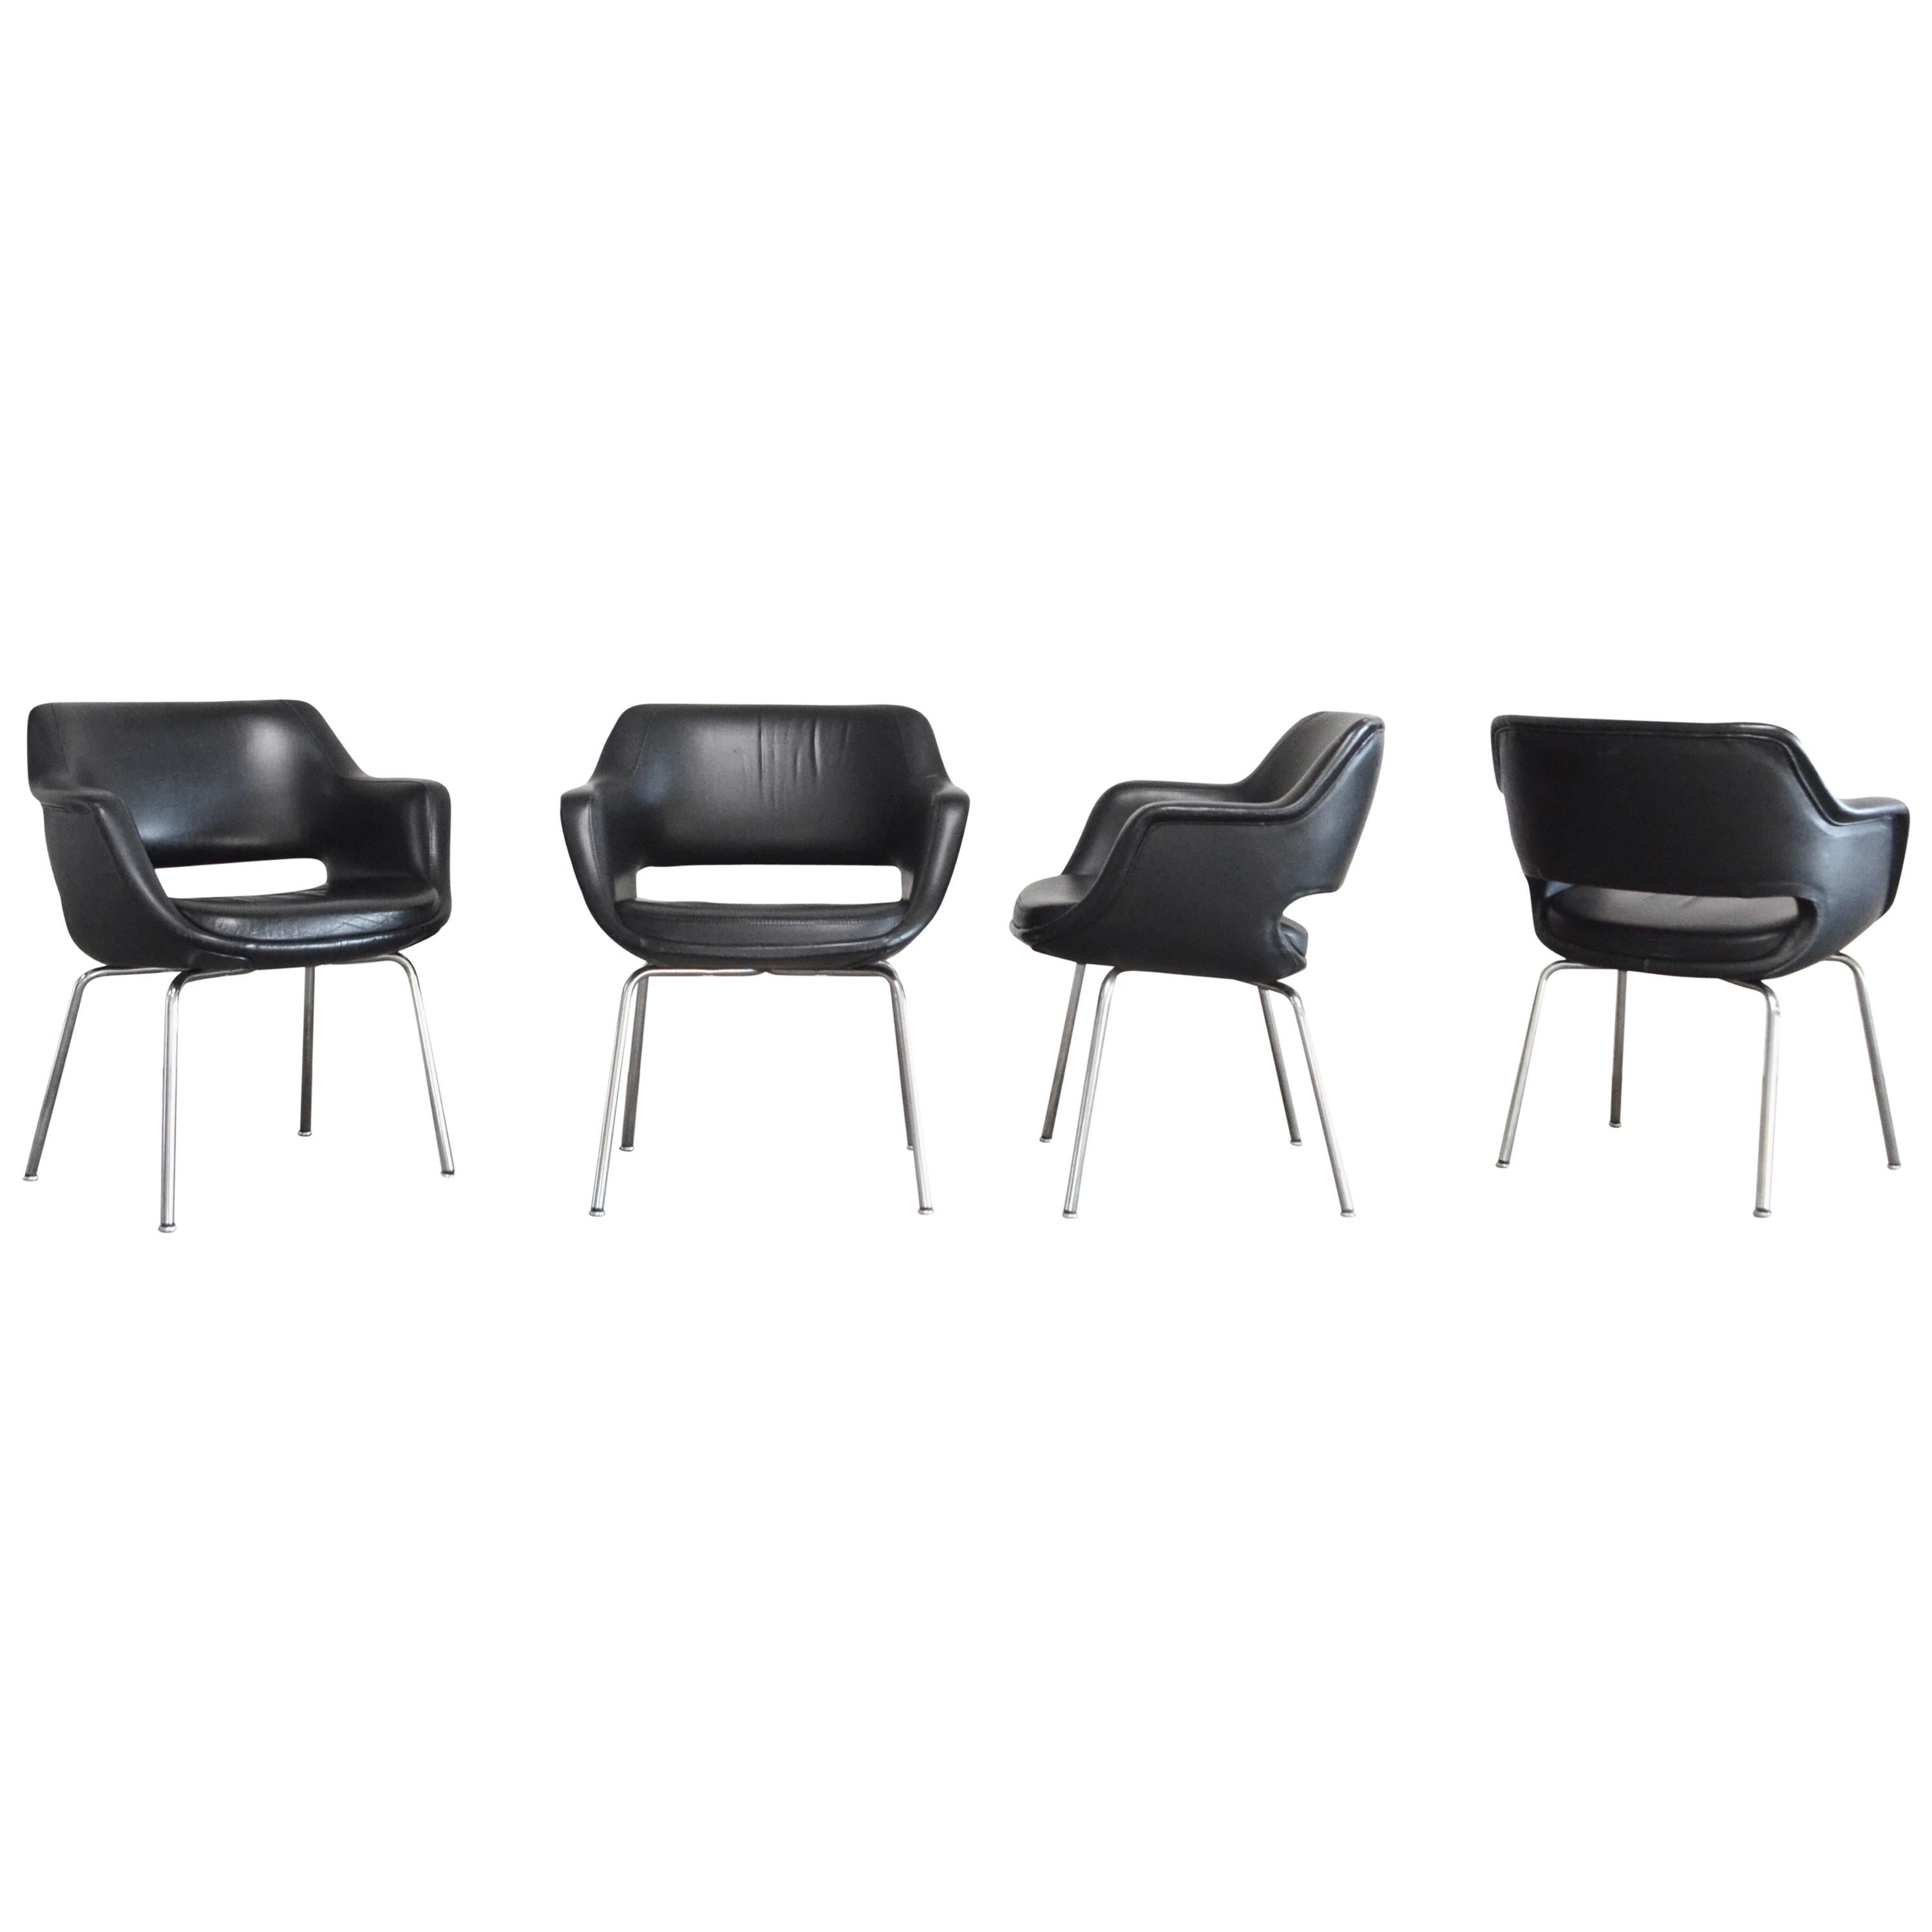 Olli Mannermaa Set of 4 Leather Kilta Chair by Eugen Schmidt & Cassina Martela